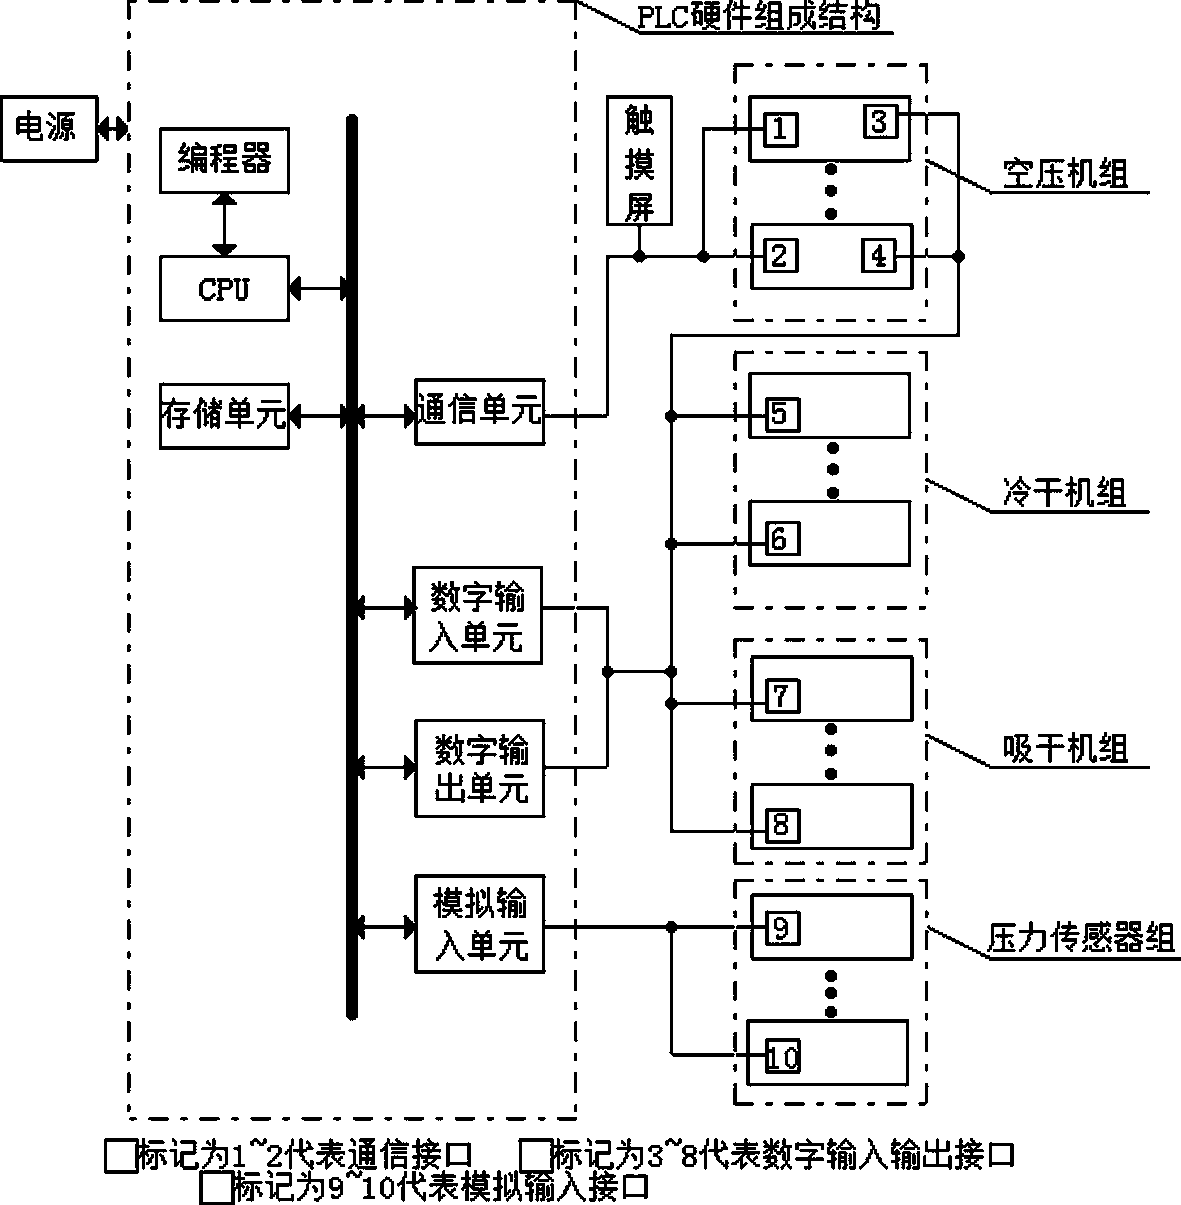 Air compressor unit networking control system of PROFIBUS bussing technique